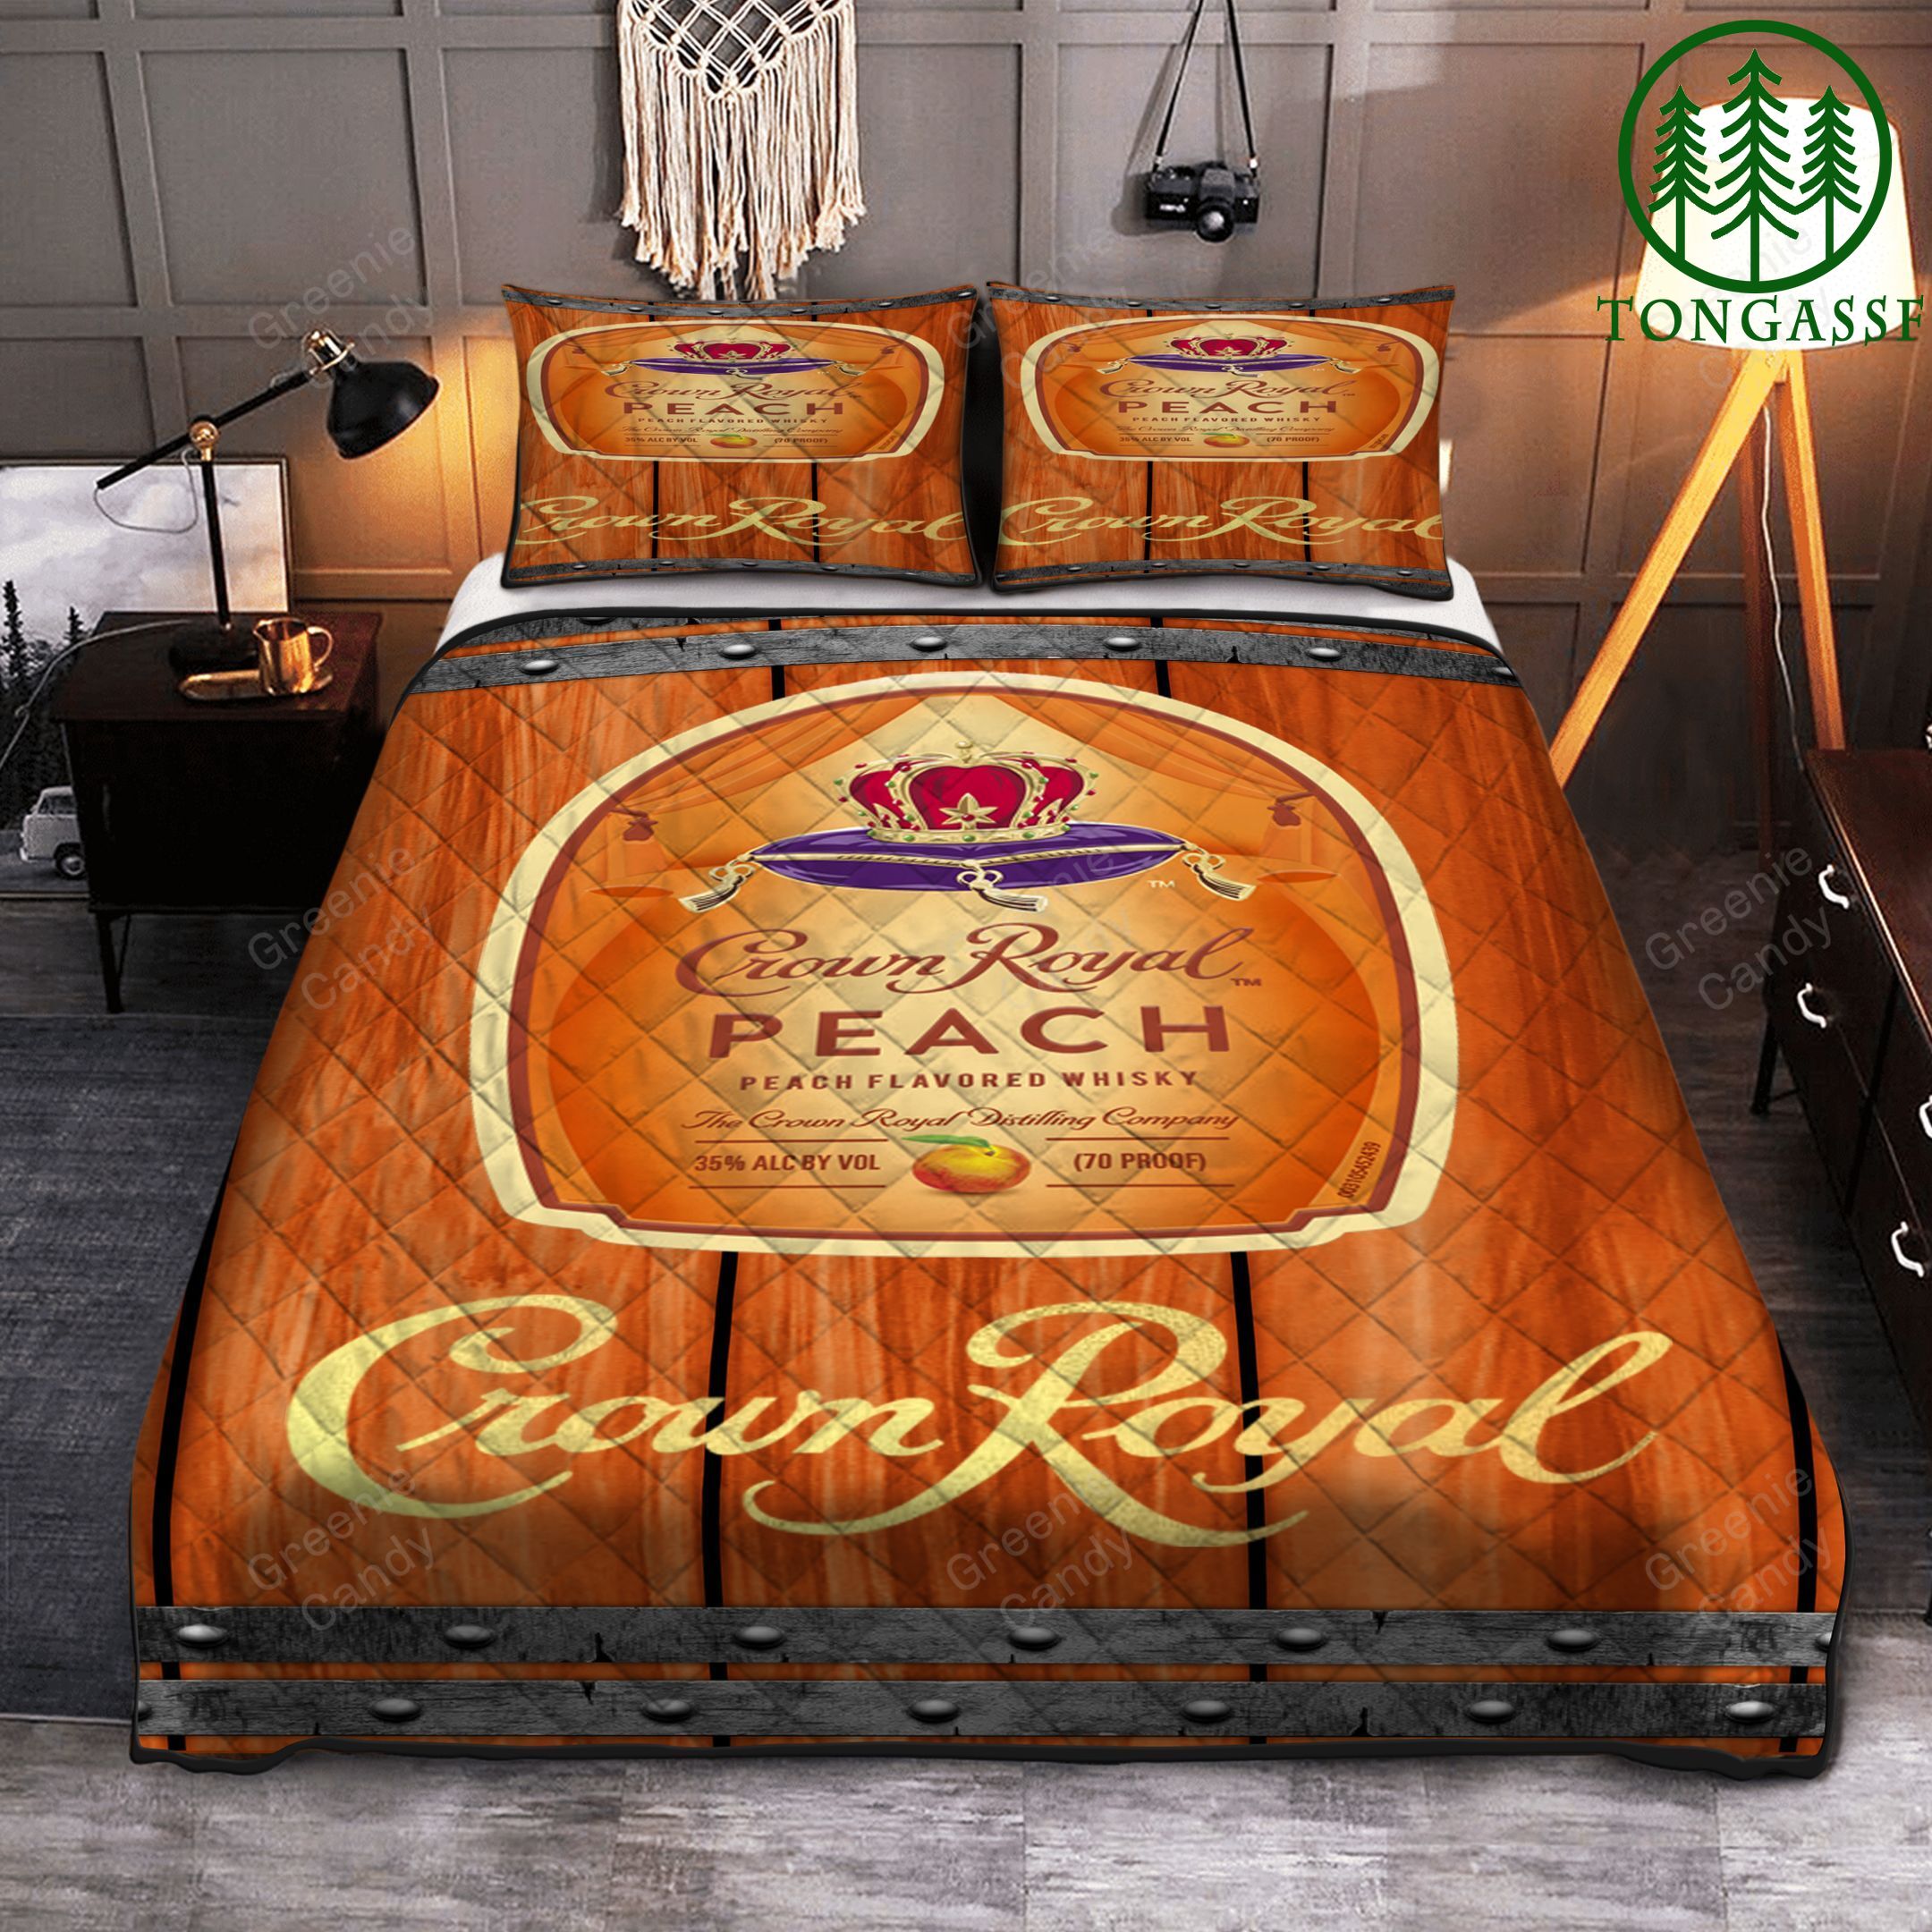 aZgLtmmC 33 Whiskey Crown Royal Peach barrel Quilt Bedding Set